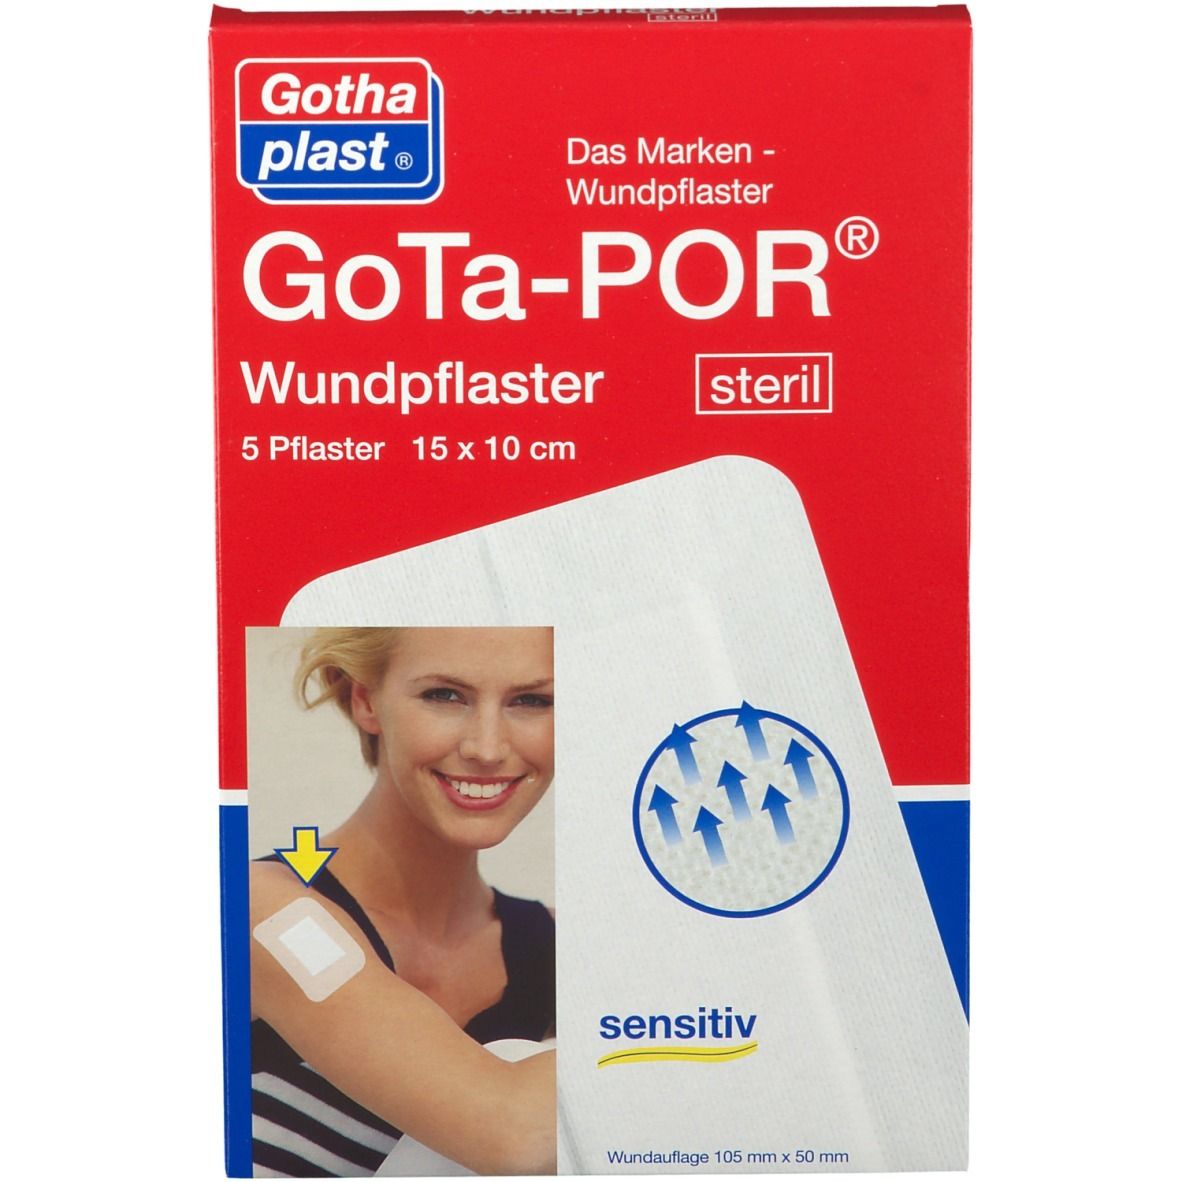 GoTa-Por Wundpflaster steril 15 x 10 cm